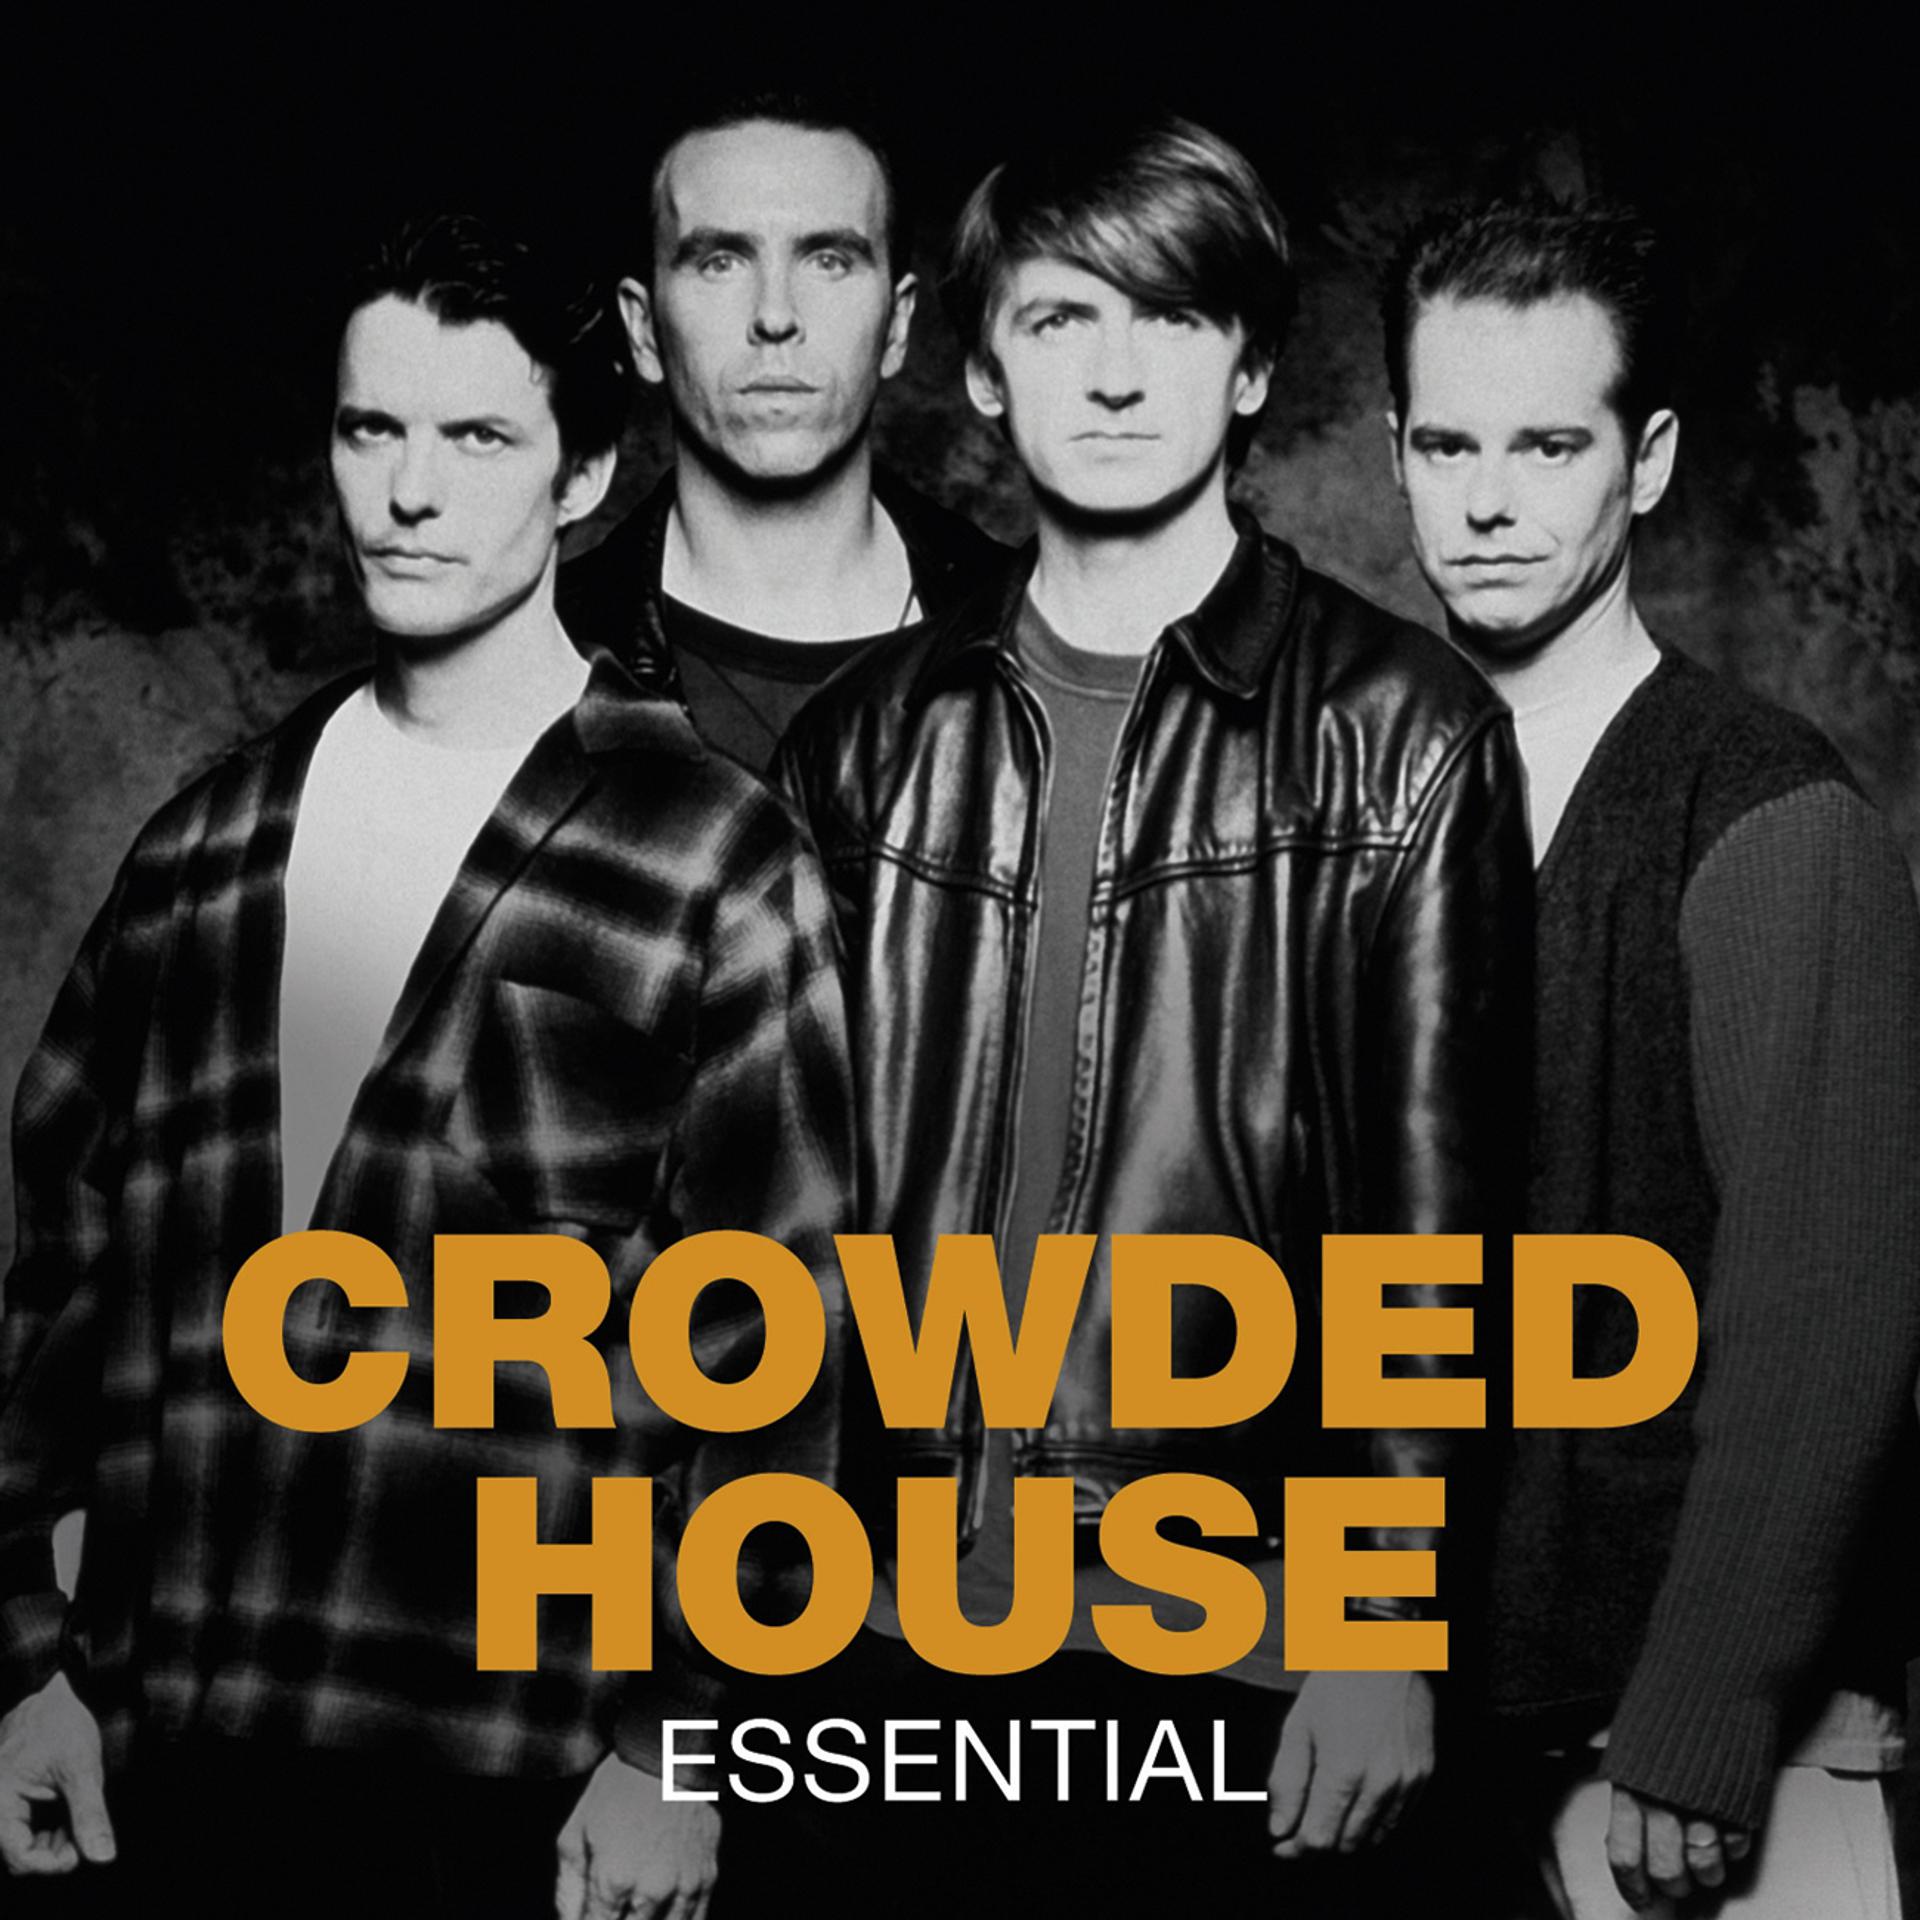 Crowded House 1986 группа. Crowded House crowded House 1986. Crowded House обложки альбомов. Crowded House обложки альбомов crowded. Crowded house don t dream it s